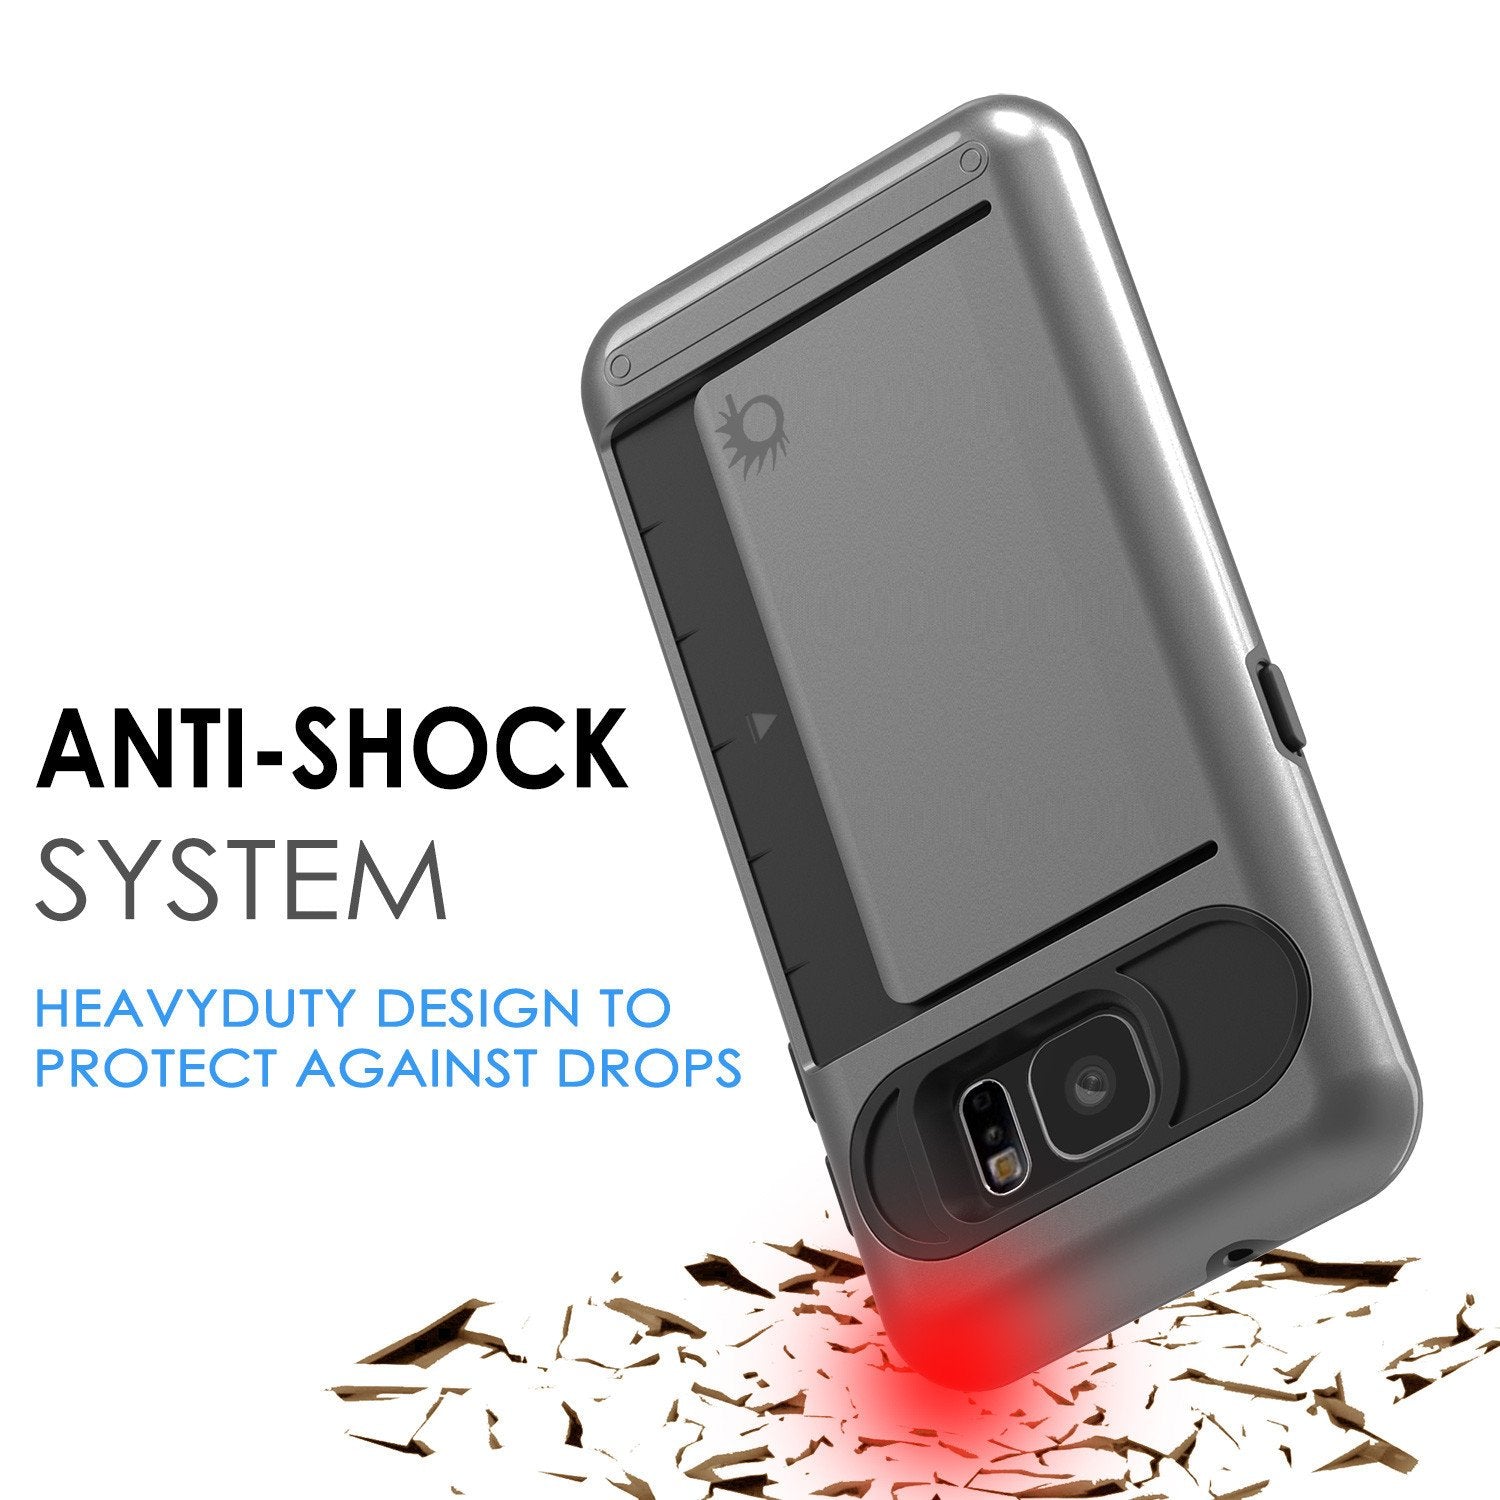 Galaxy S7 EDGE Case PunkCase CLUTCH Grey Series Slim Armor Soft Cover Case w/ Screen Protector - PunkCase NZ